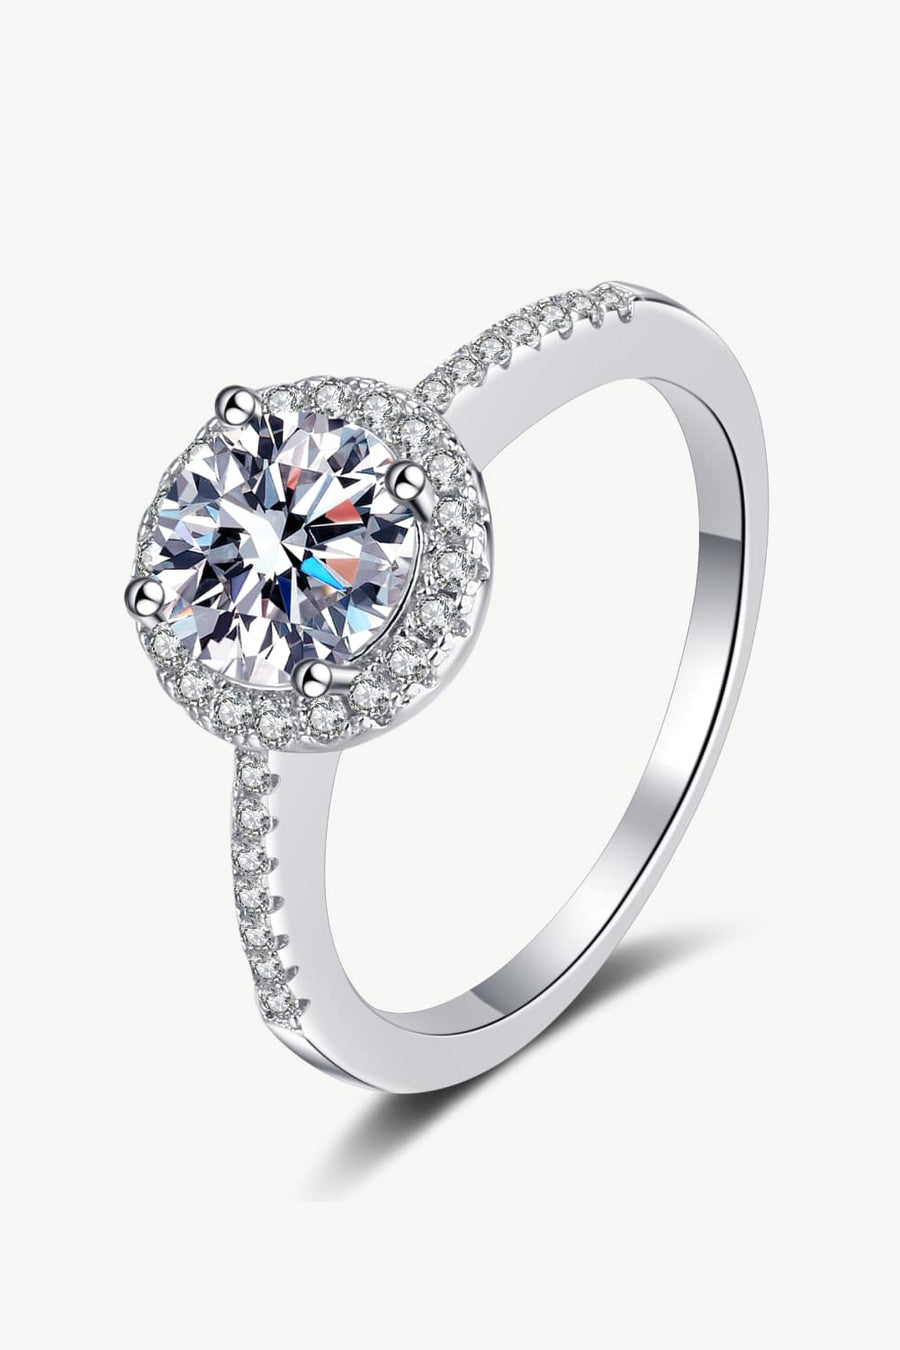 Best Diamond Ring Jewelry Gifts for Women | 0.5 Carat Diamond Ring - Ready To Flaunt | MASON New York